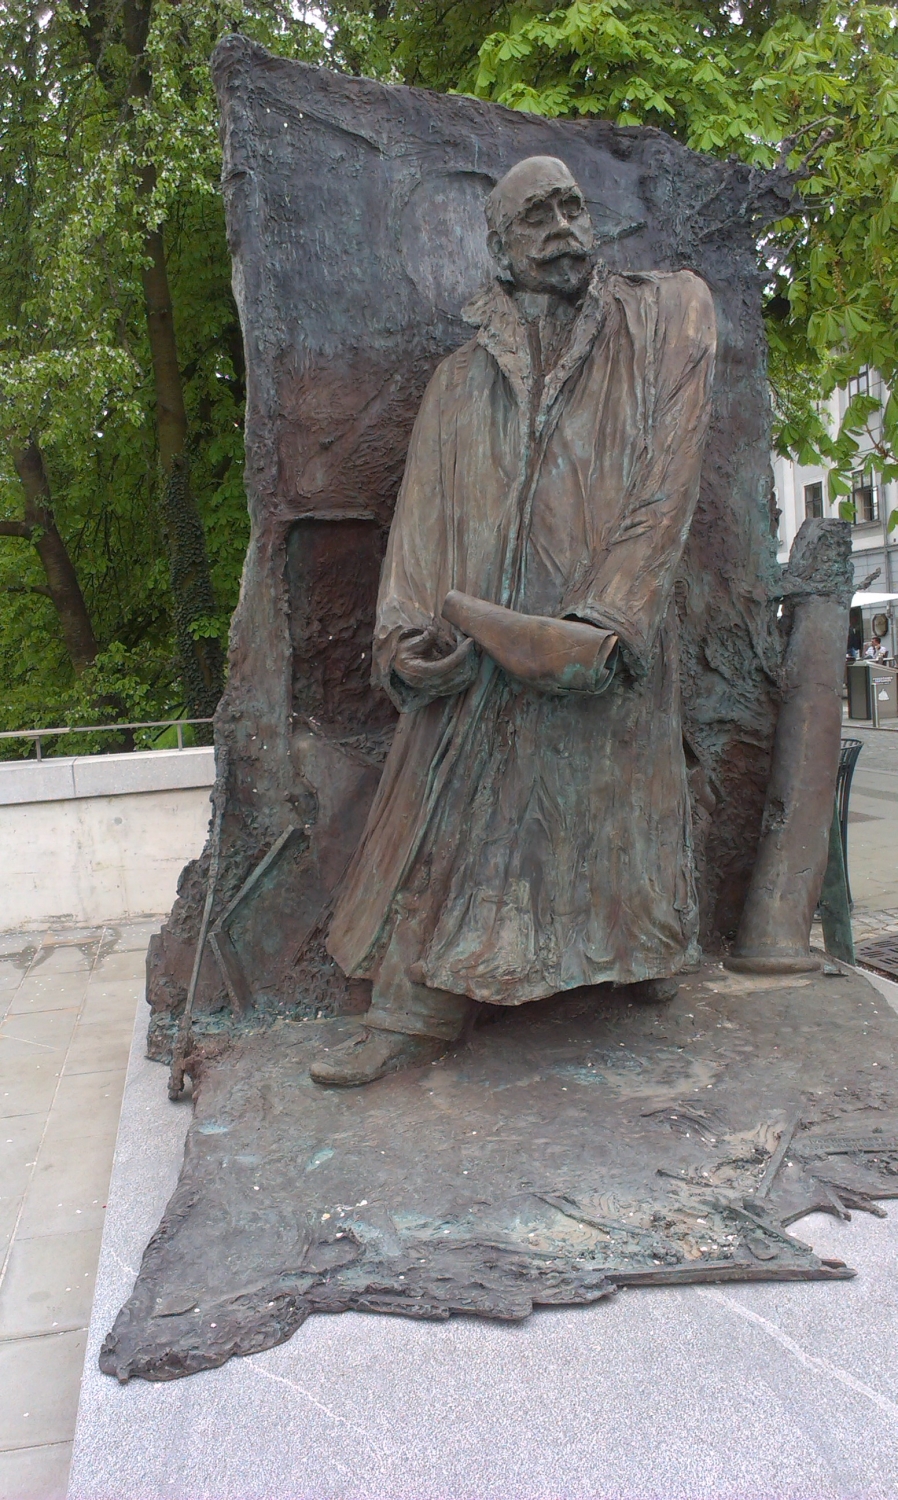 Spomenik županu Ivanu Hribarju, Breg v Ljubljani, 2010, vir: https://zgodovinanadlani.si/wp-content/uploads/2015/04/spomenik_ivan_hribar_mirsad_begi%c4%87.jpg